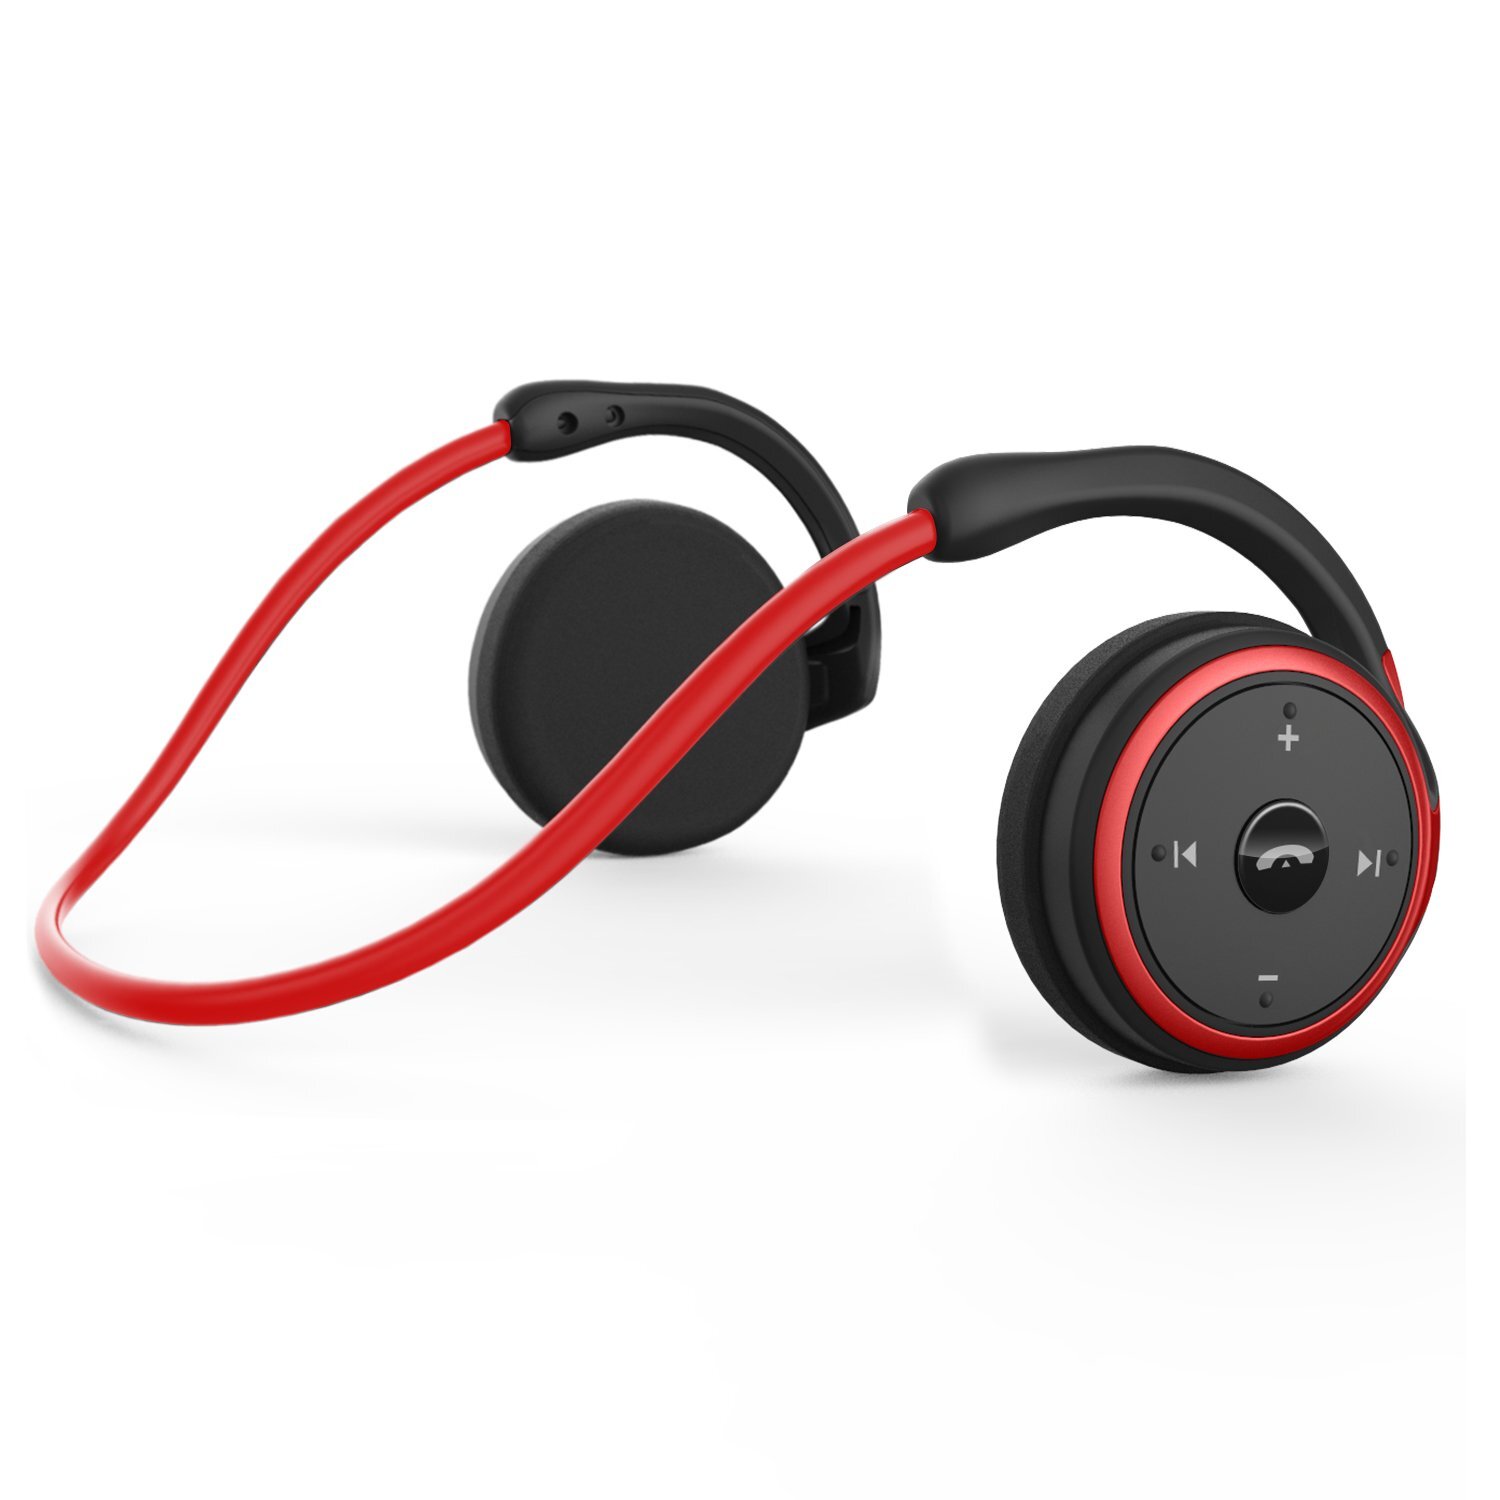 Наушники Sport Wireless Headset Earphone 4.2. Wireless Bluetooth stereo Headset CSR4.2. Беспроводные наушники блютуз 4.2. Наушники x5 BT 5.0 Comfy Fit.